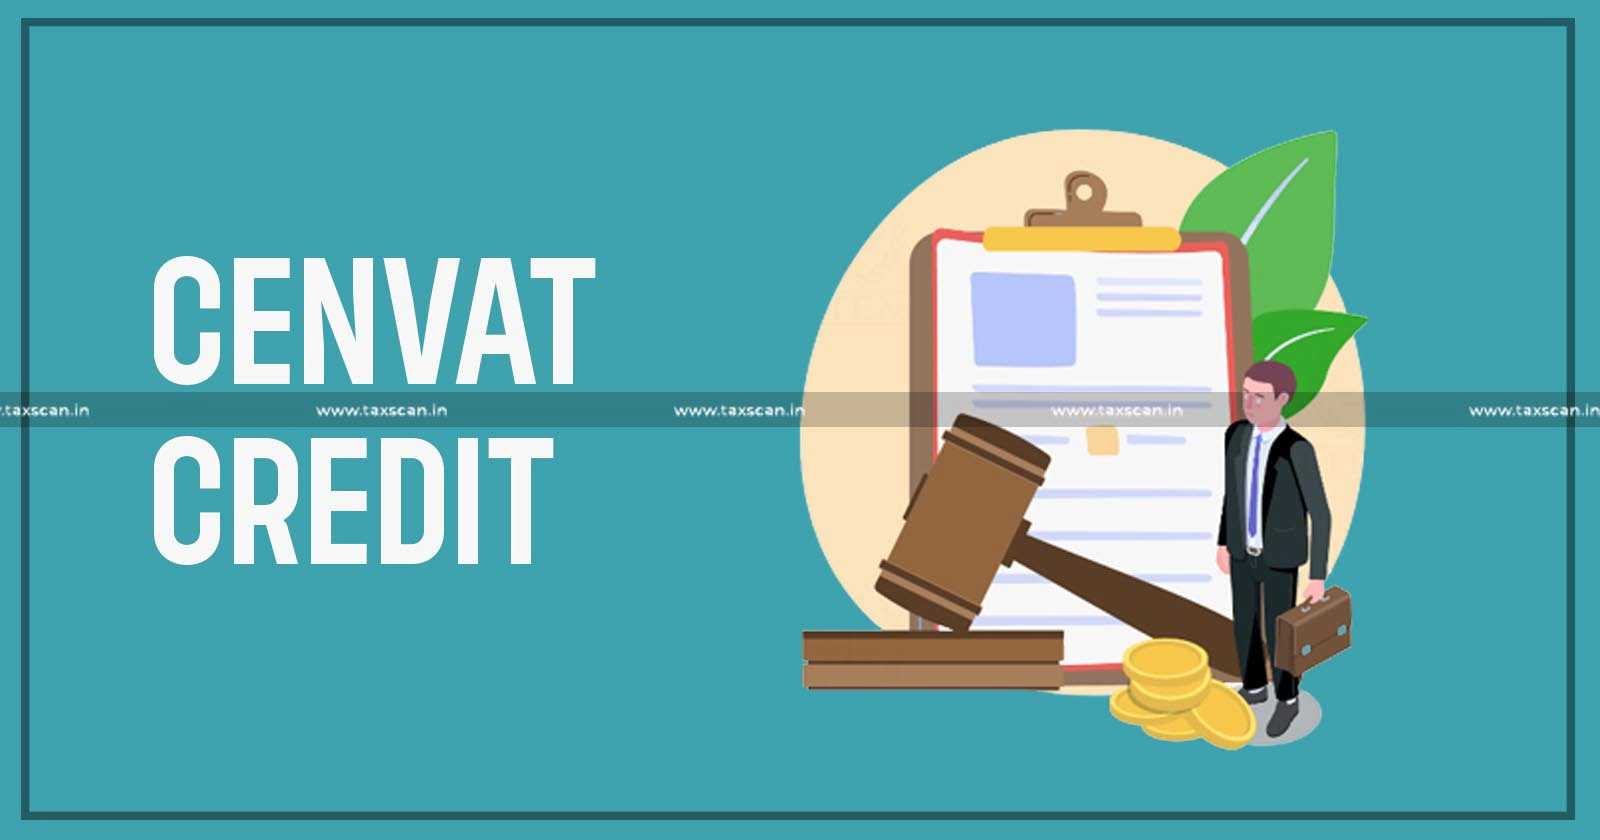 CESTAT - excise - Cenvat Credit Rules - Mumbai bench - taxscan